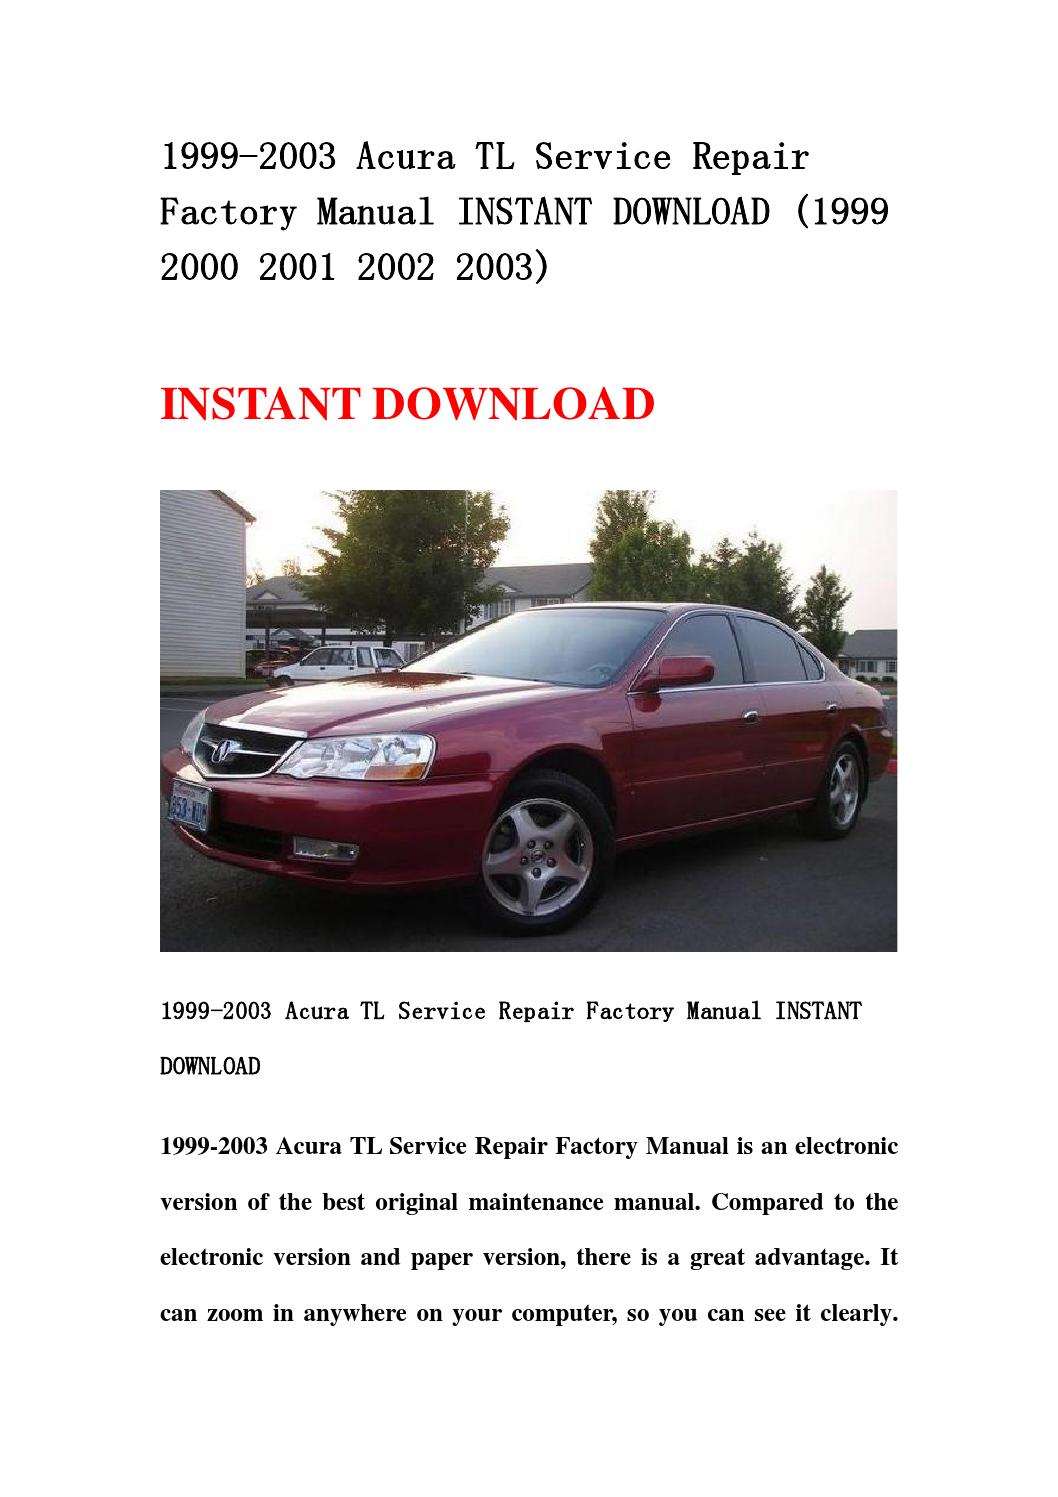 1999 acura tl service manual download repair manuals